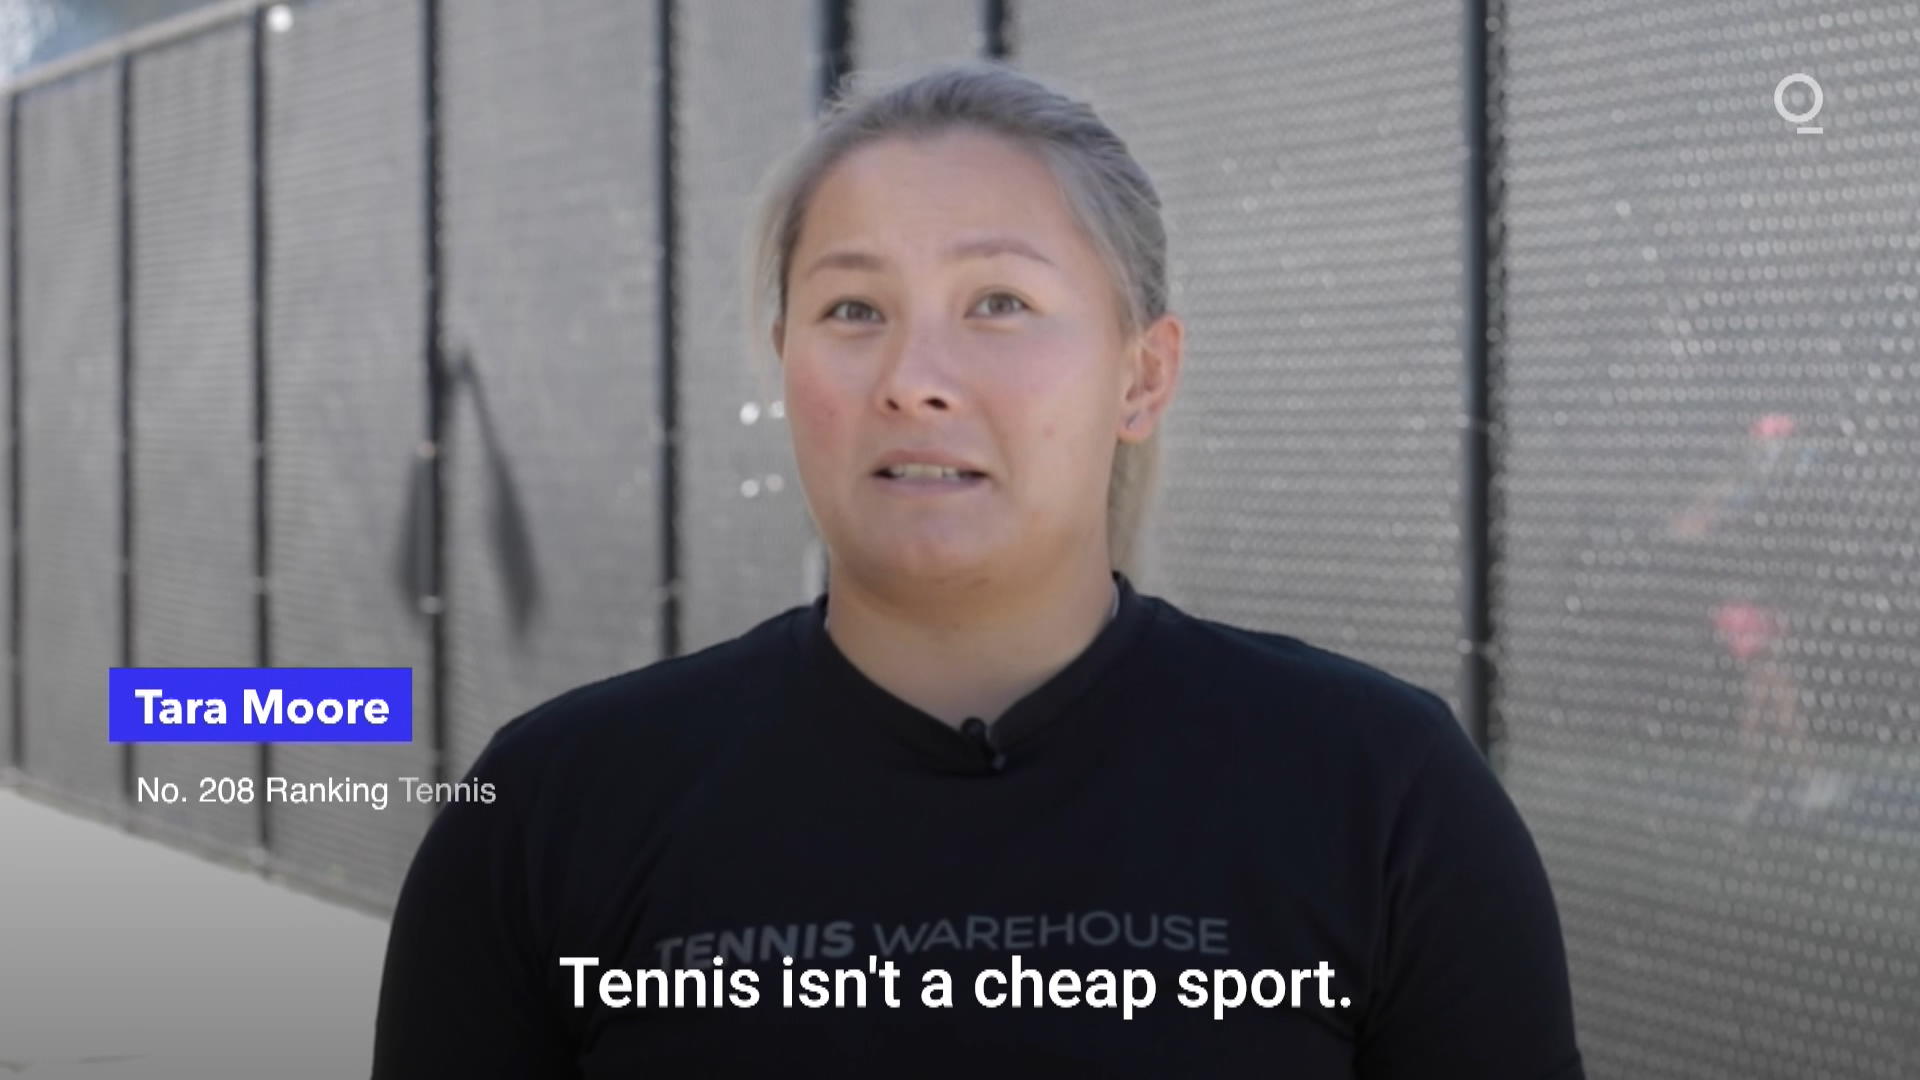 Avid gamers Need Tennis to Fix Its Economics